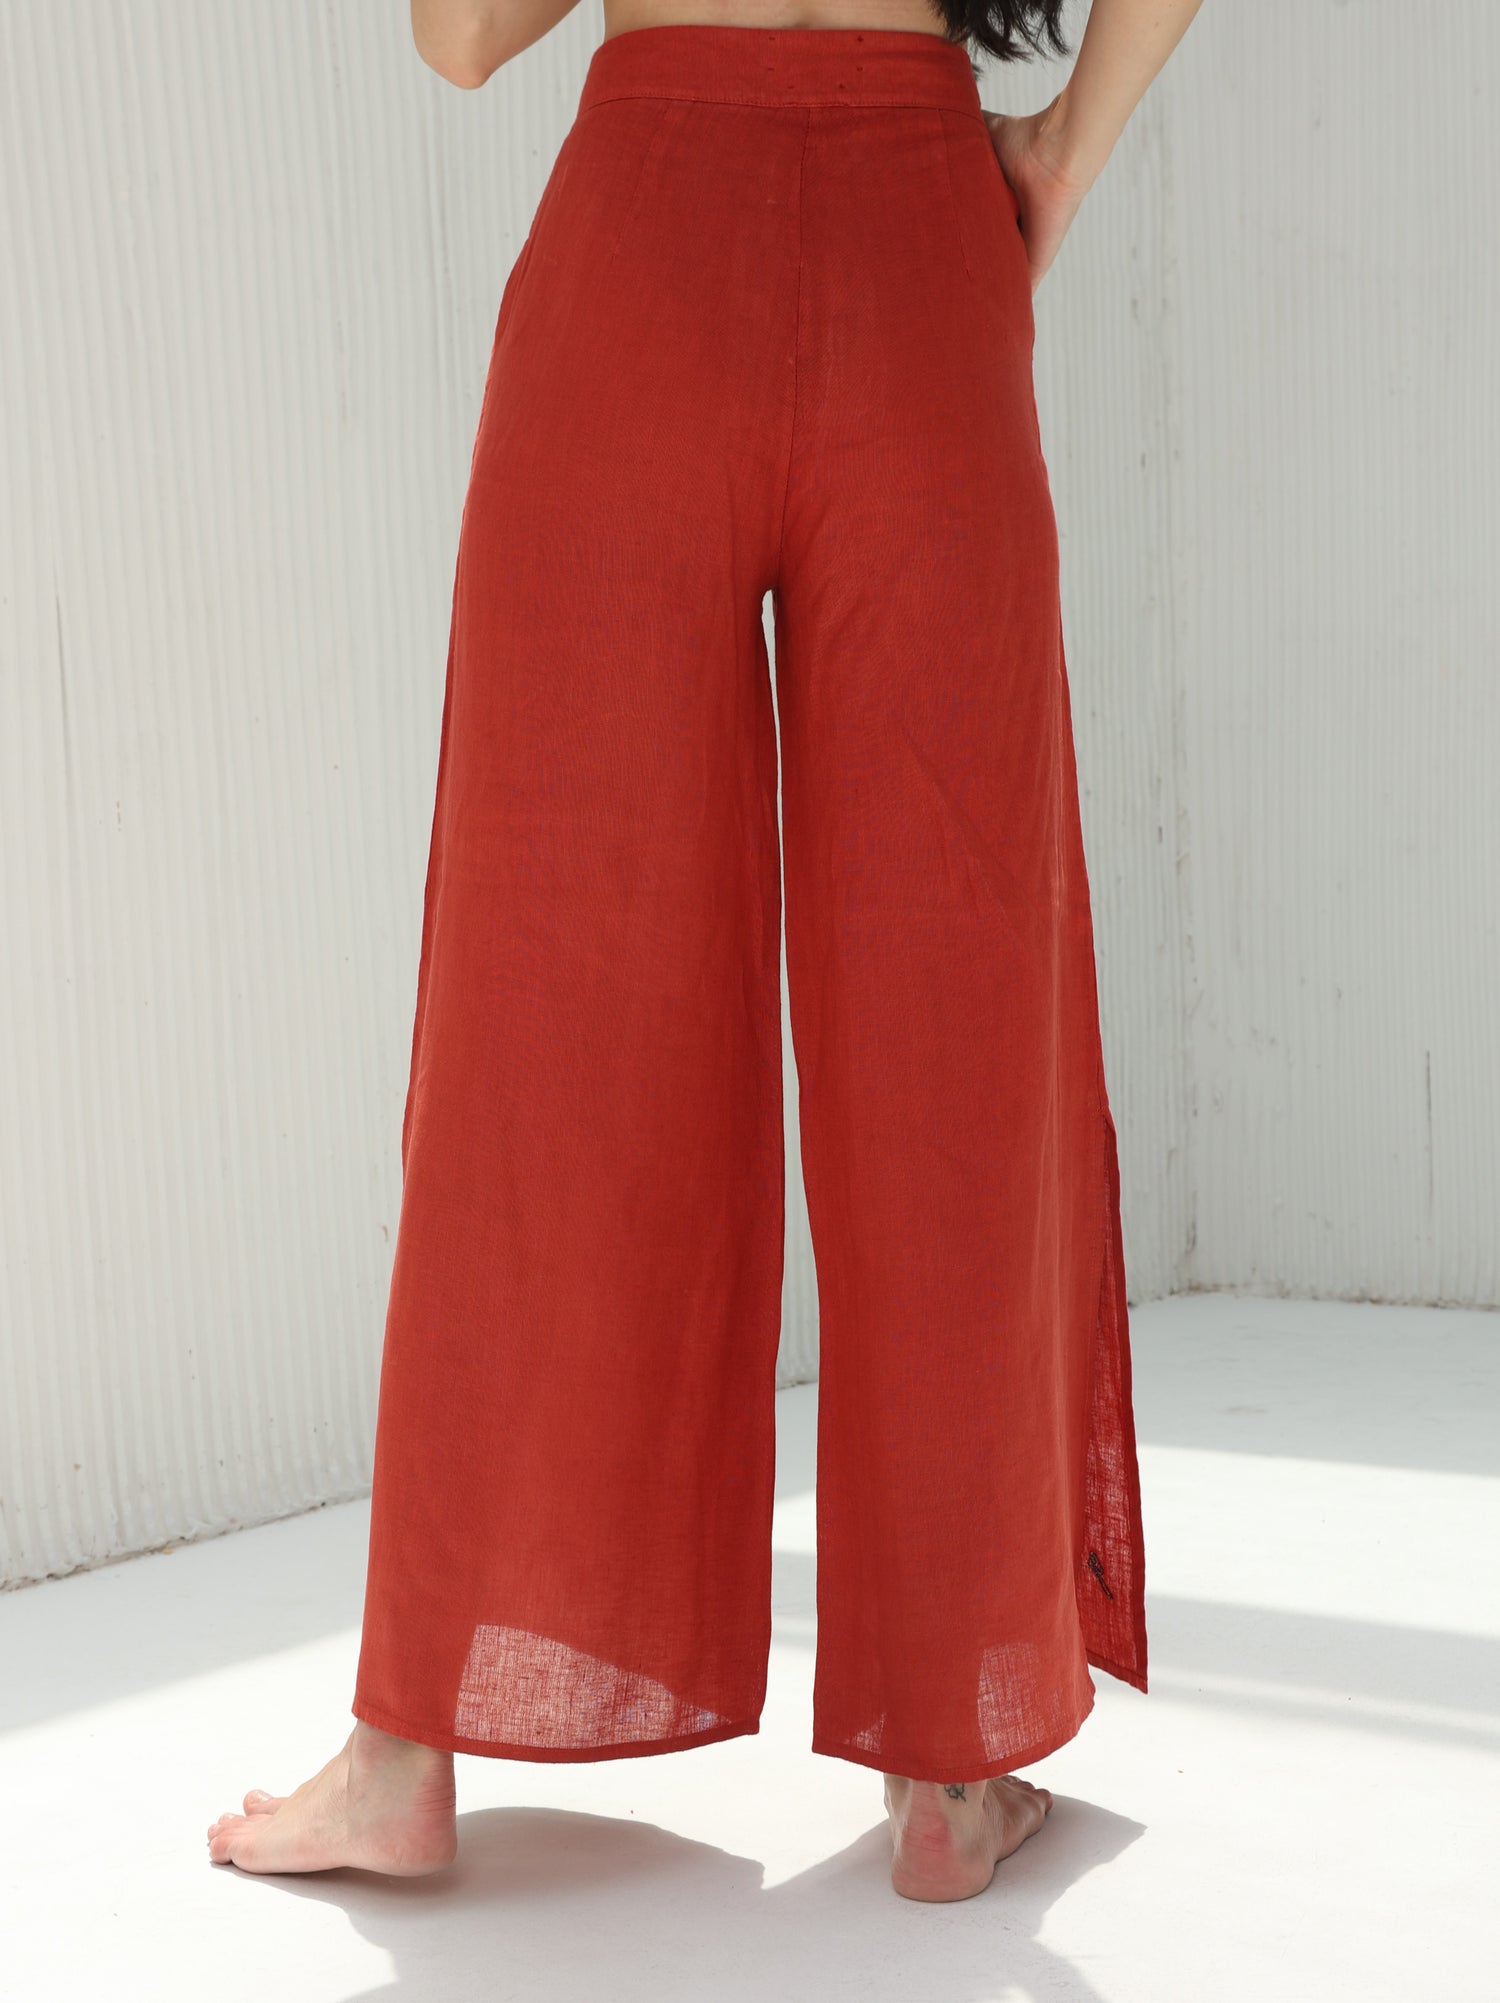 Sofia Pure Linen Side-Slit Pants From G Linen - Pompeian Red - Back Shot